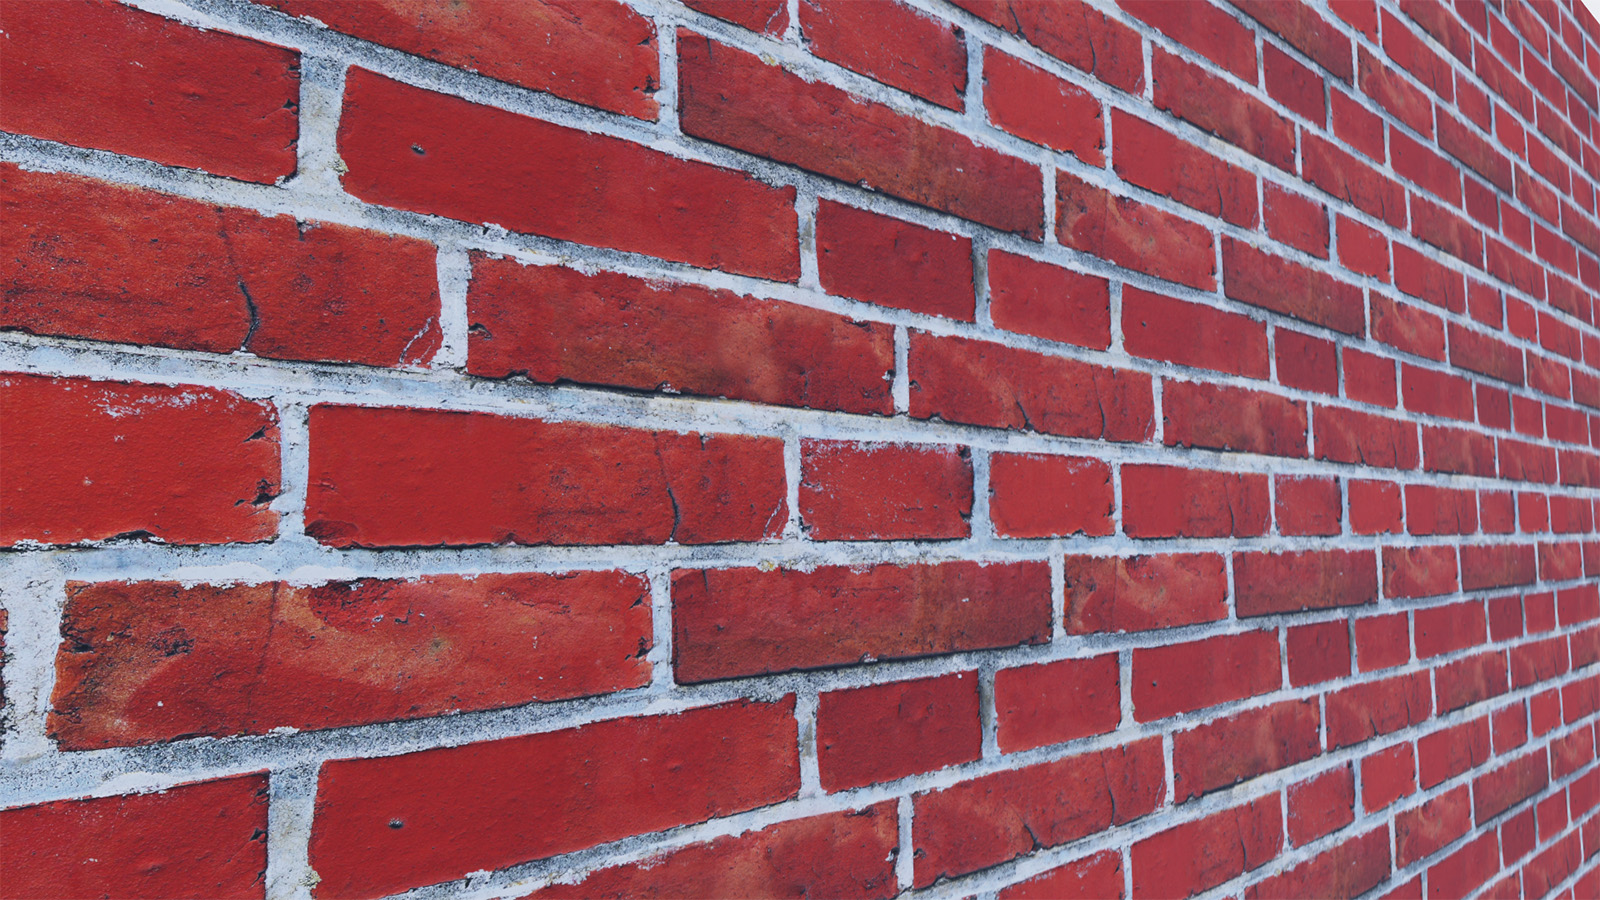 Brick Wall.jpg